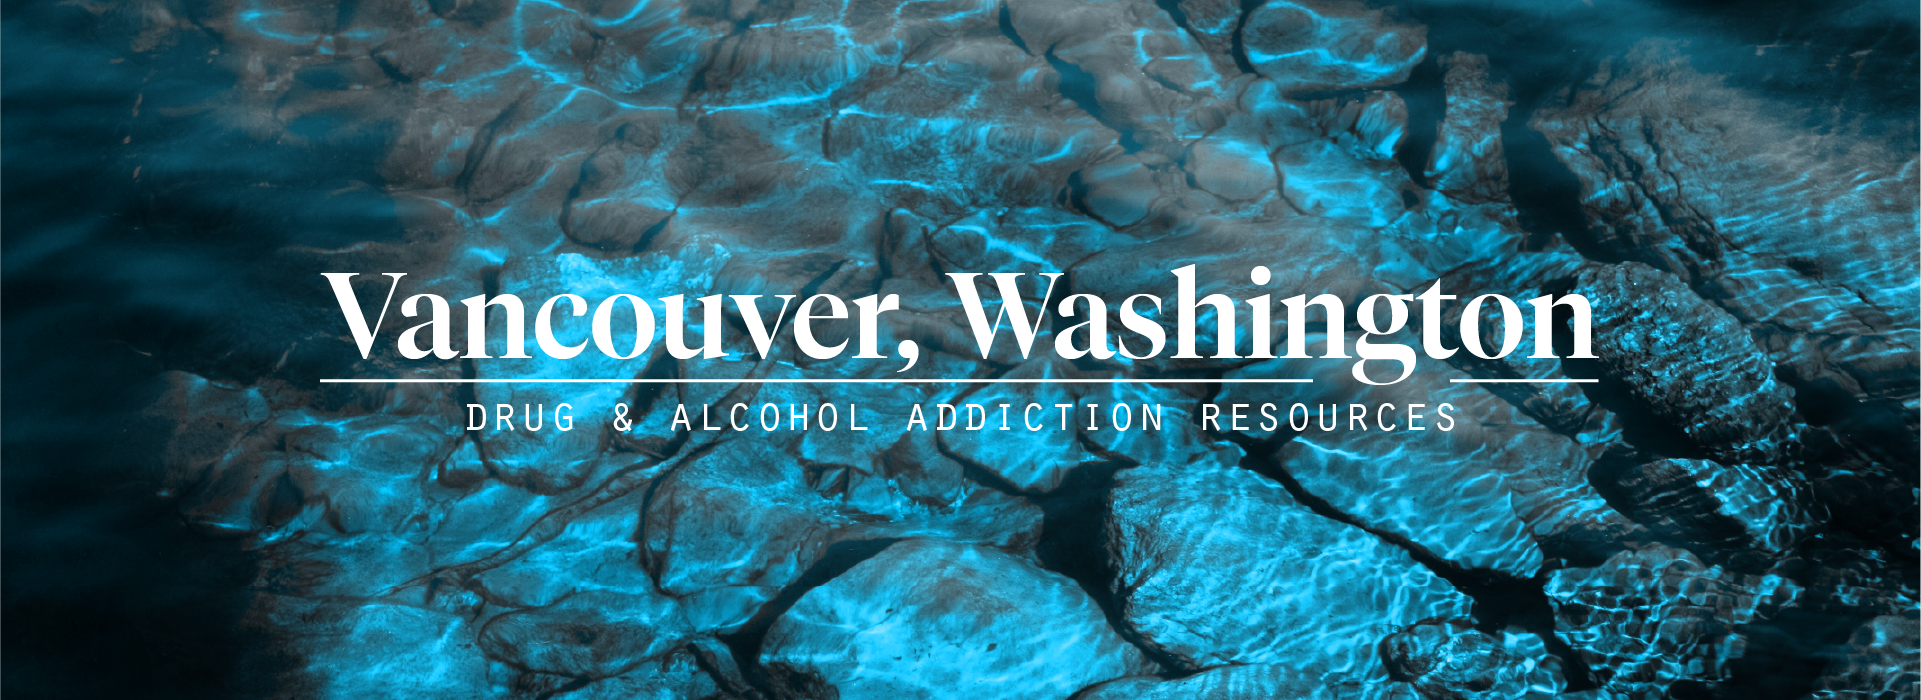 Vancouver, Washington Addiction Information